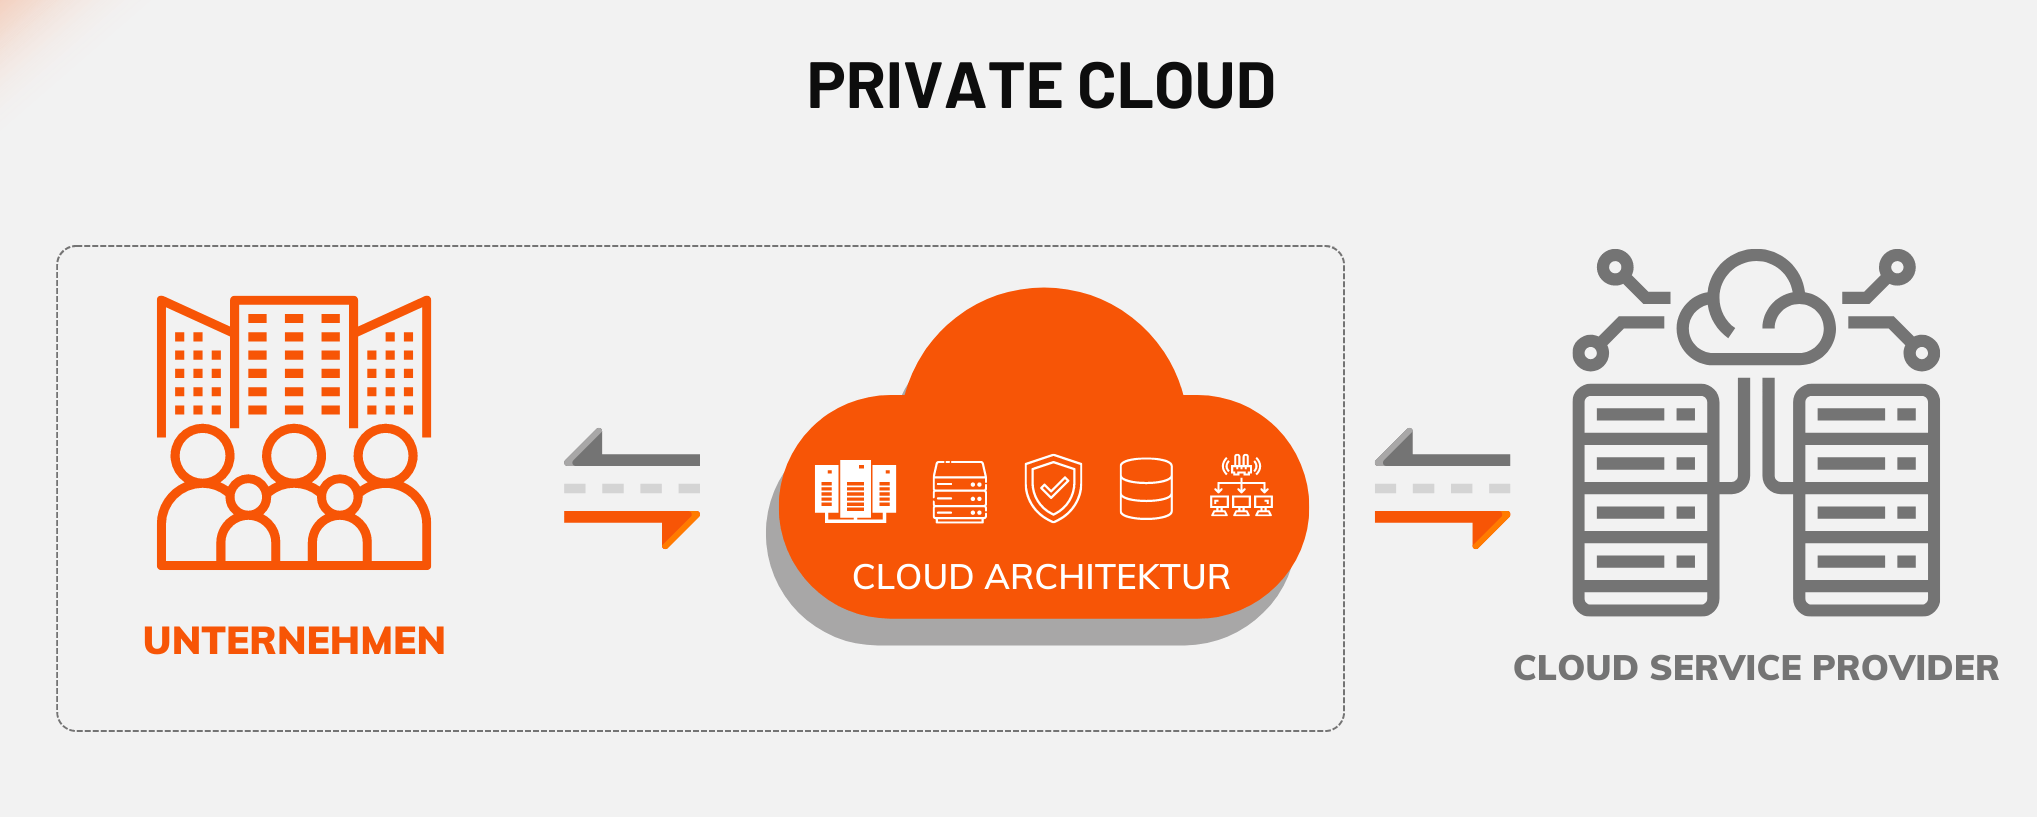 Private Cloud - Cloud Computing